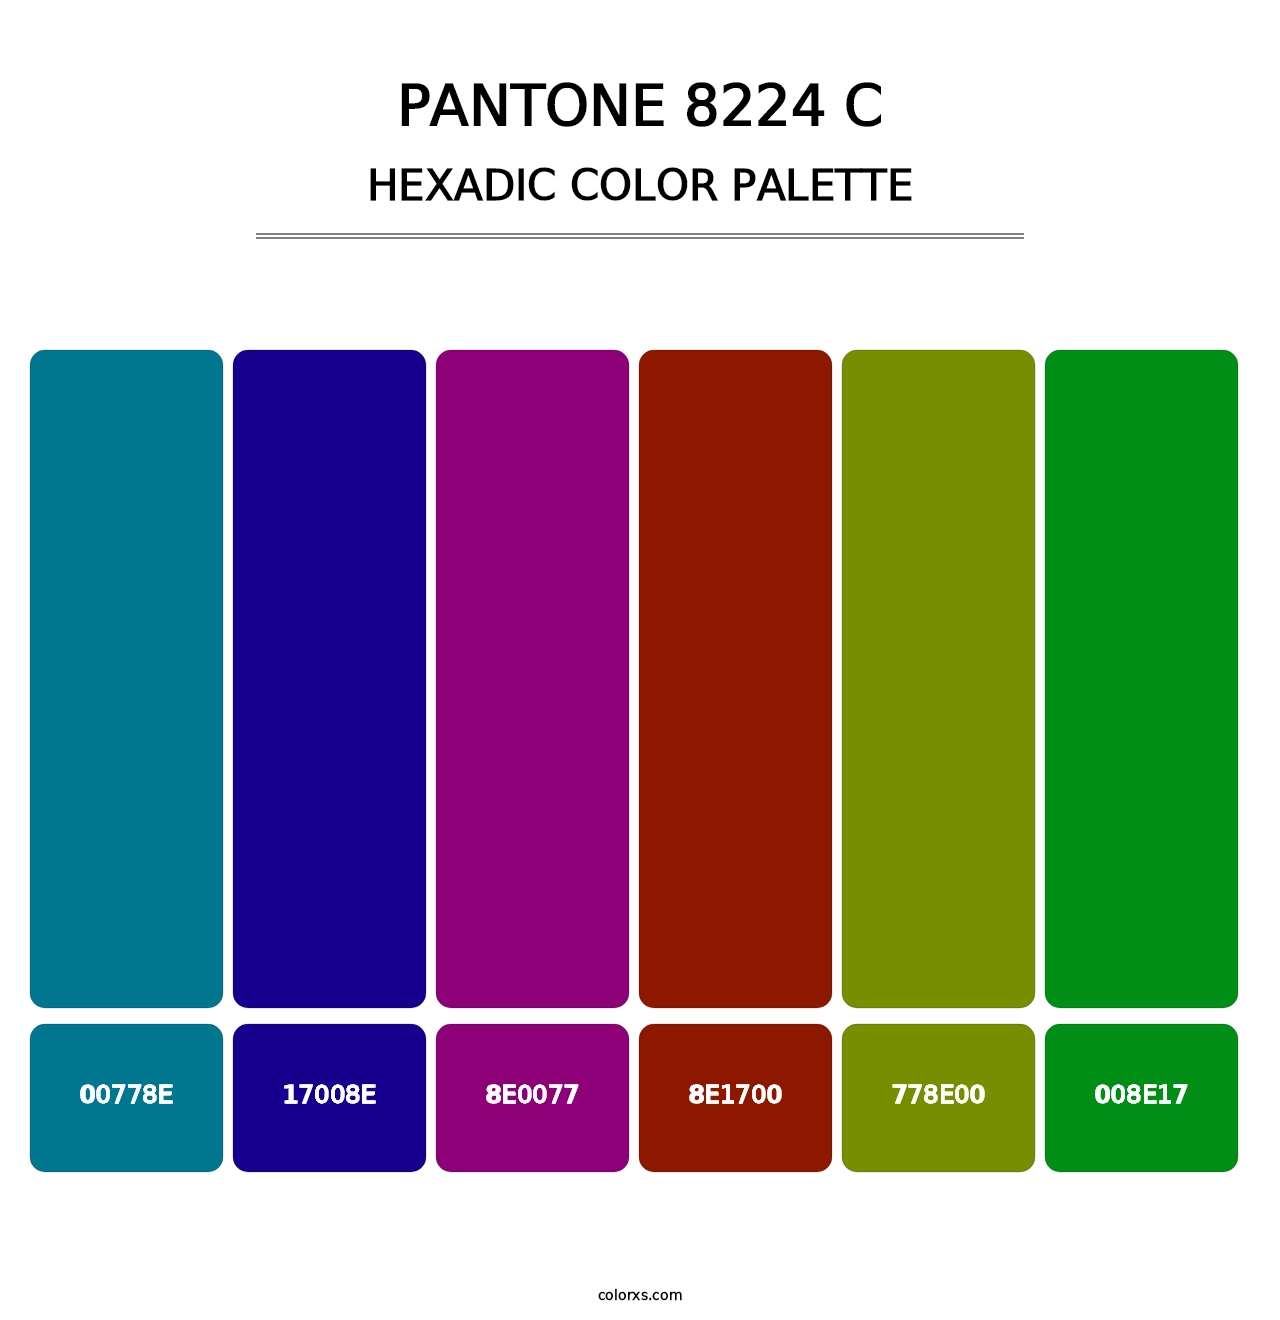 PANTONE 8224 C - Hexadic Color Palette